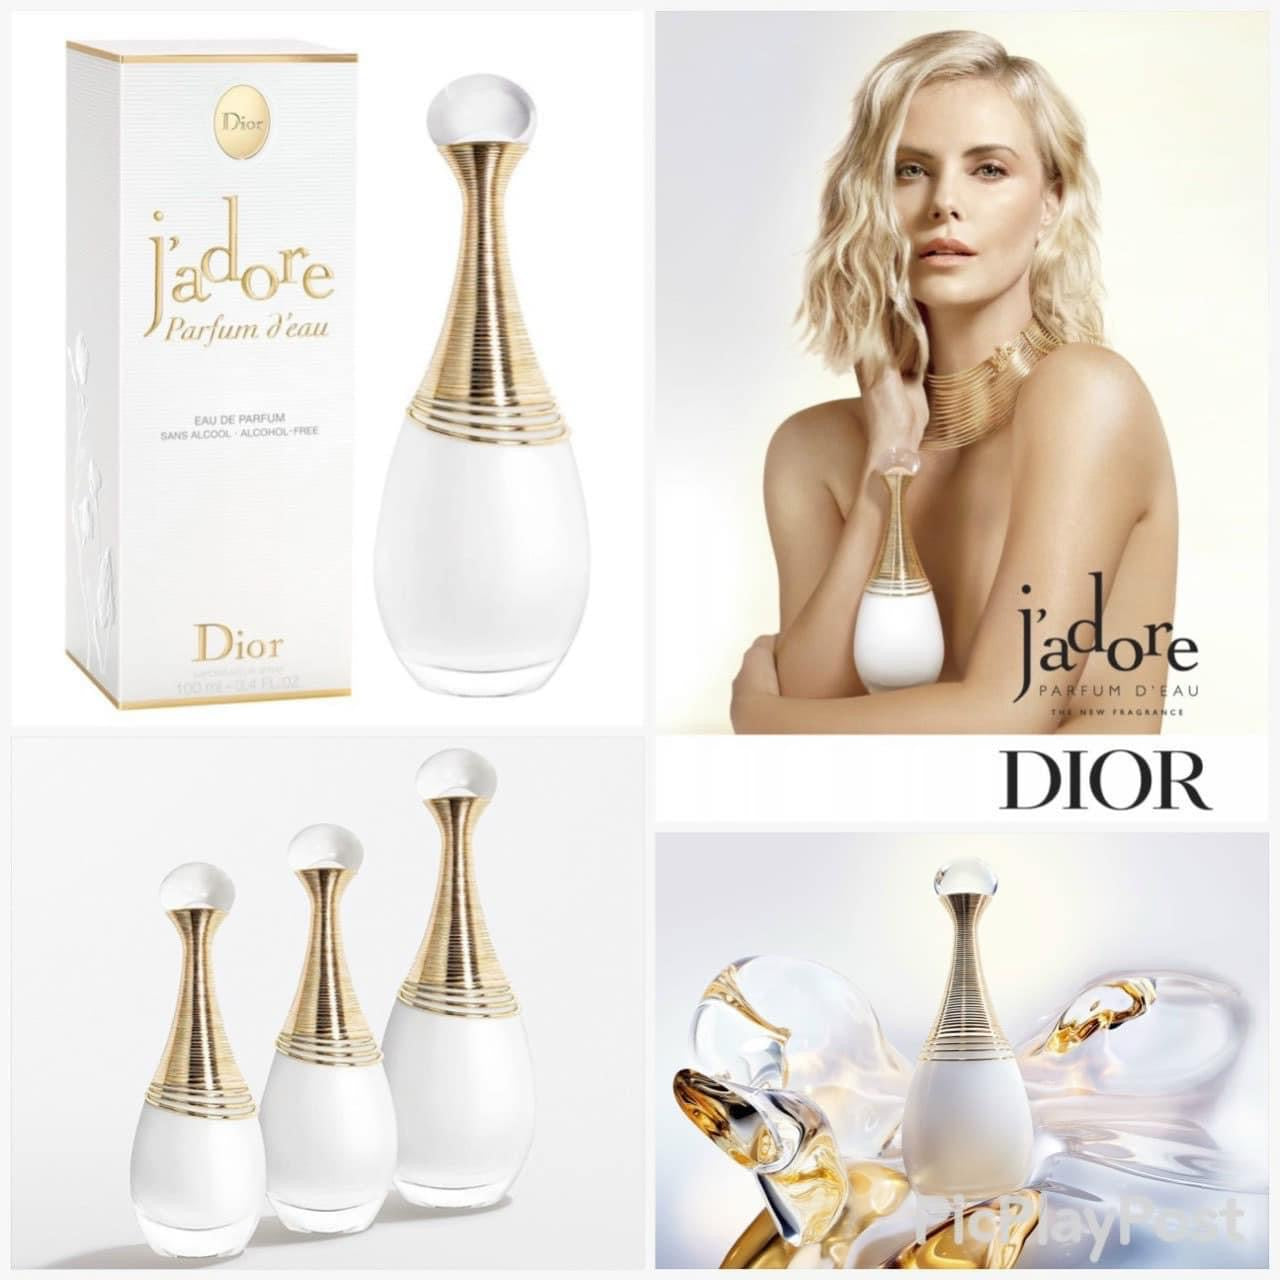 JAdore Eau De Parfum  Classic Iconic Perfume  DIOR US